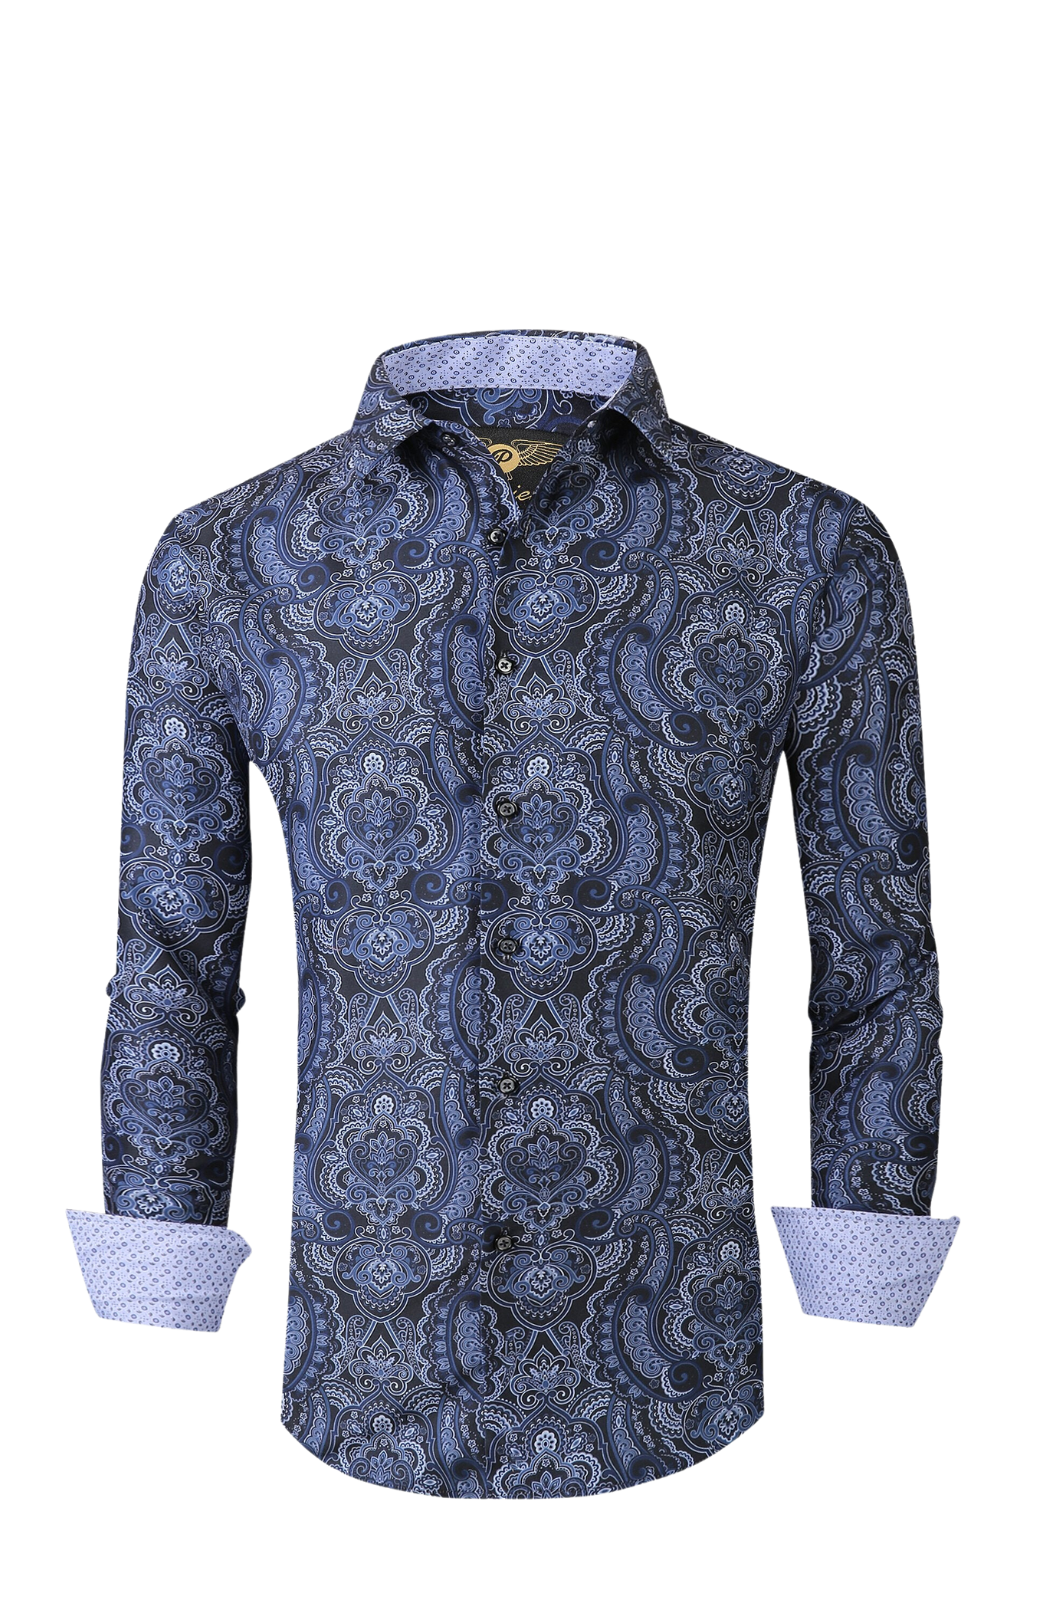 Mens PREMIERE Long Sleeve Button Down Dress Shirt NAVY BLUE Paisley Print